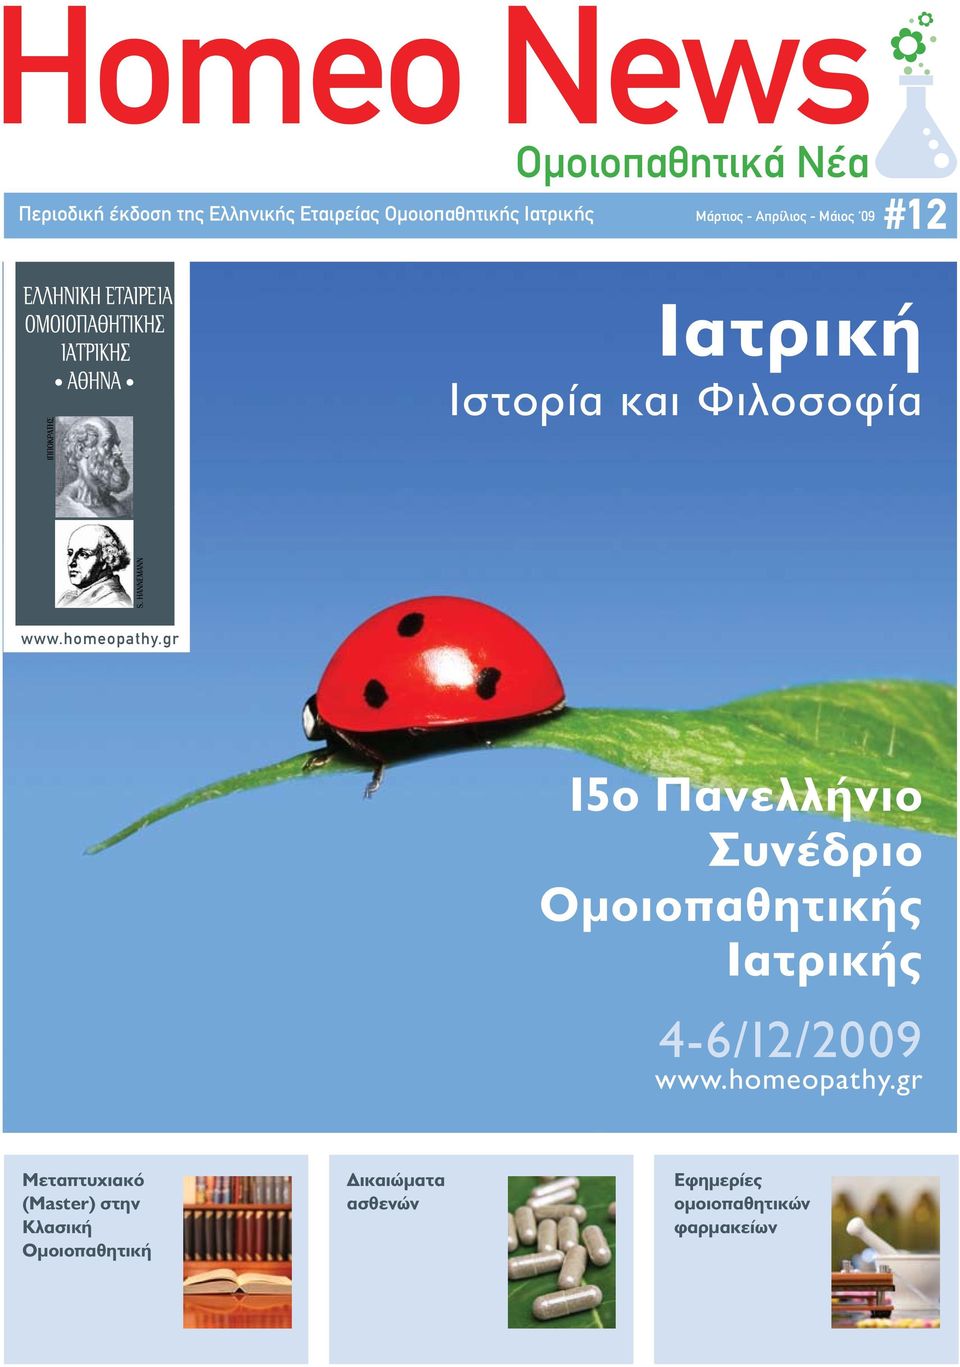 gr 15o Πανελλήνιο Συνέδριο Ομοιοπαθητικής Ιατρικής 4-6/12/2009 www.homeopathy.